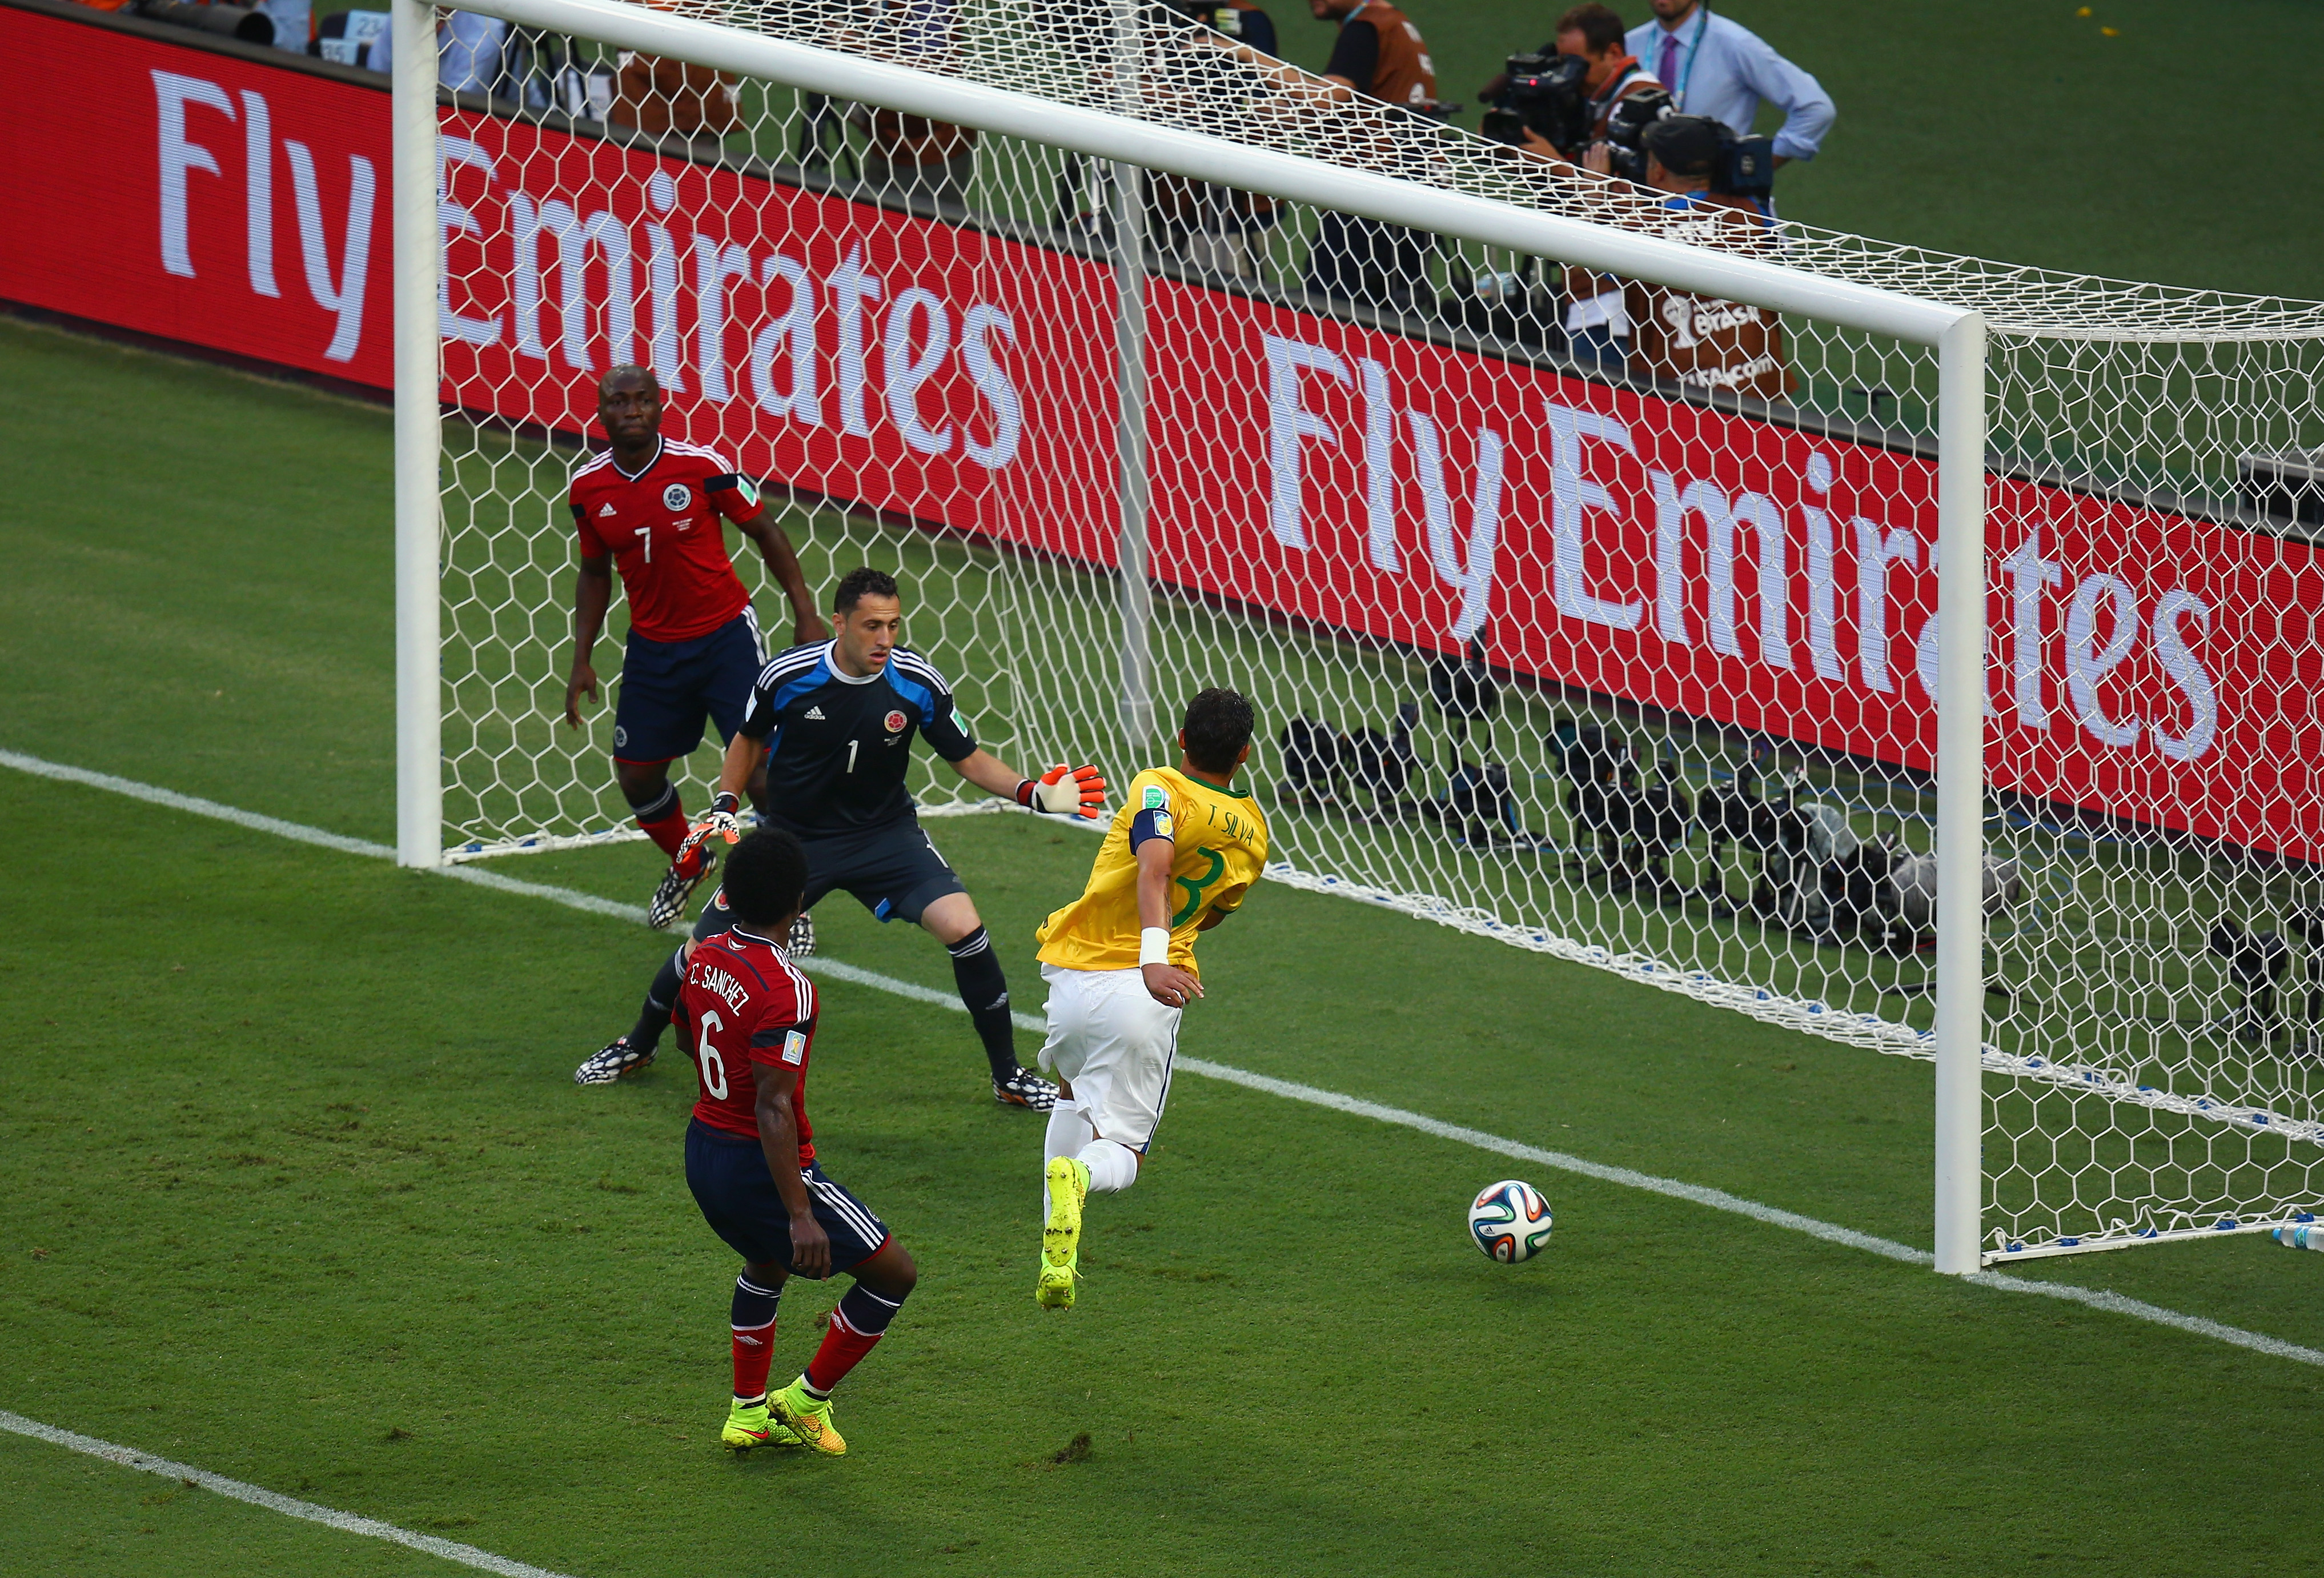 Brasilien gegen Kolumbien: Tor durch Thiago Silva für Brasilien (Video)